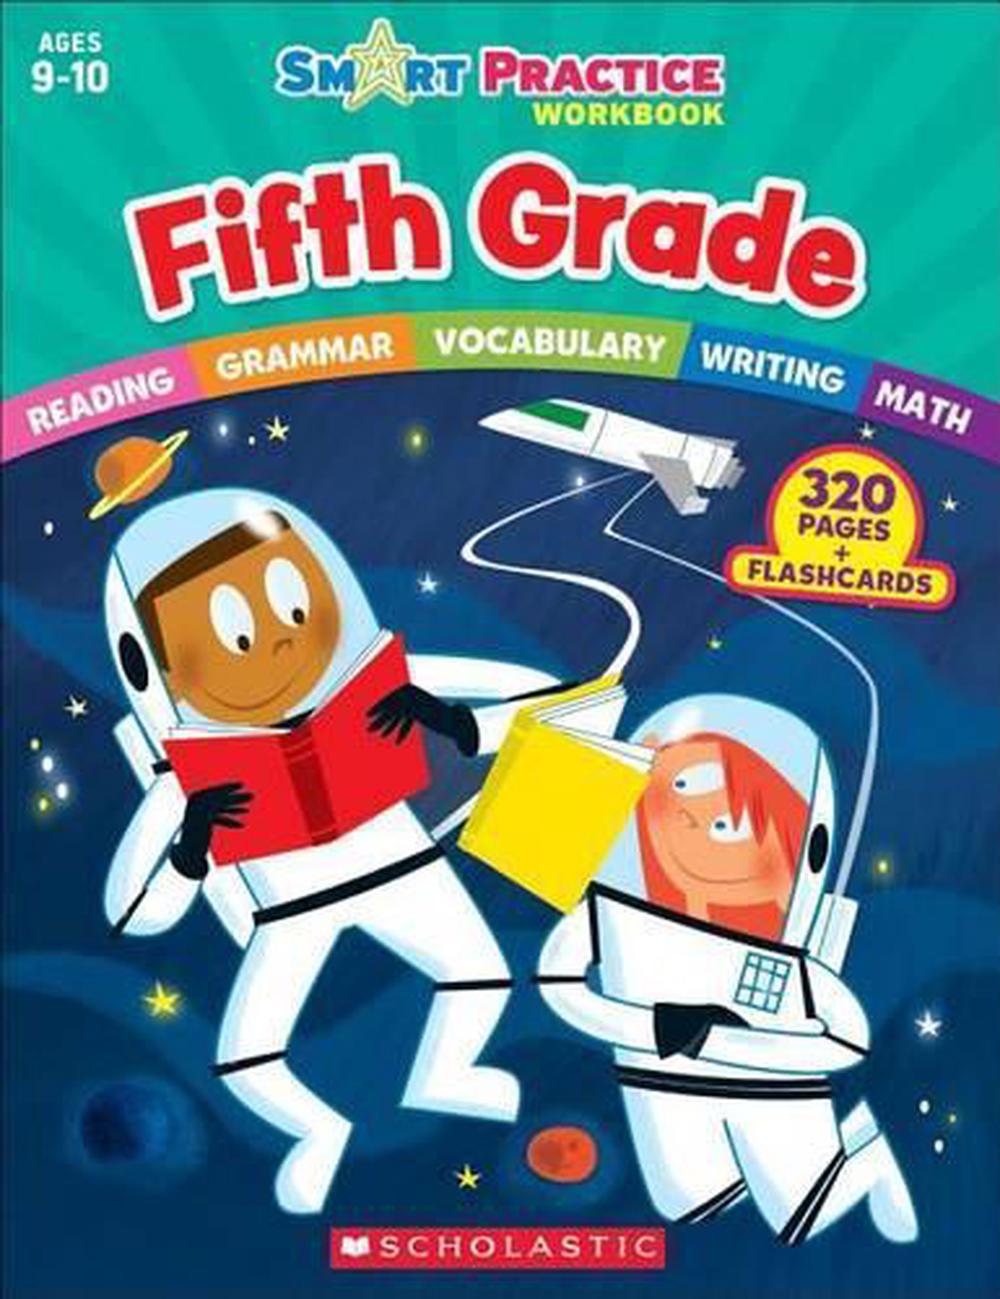 smart-practice-workbook-fifth-grade-by-scholastic-teaching-resources